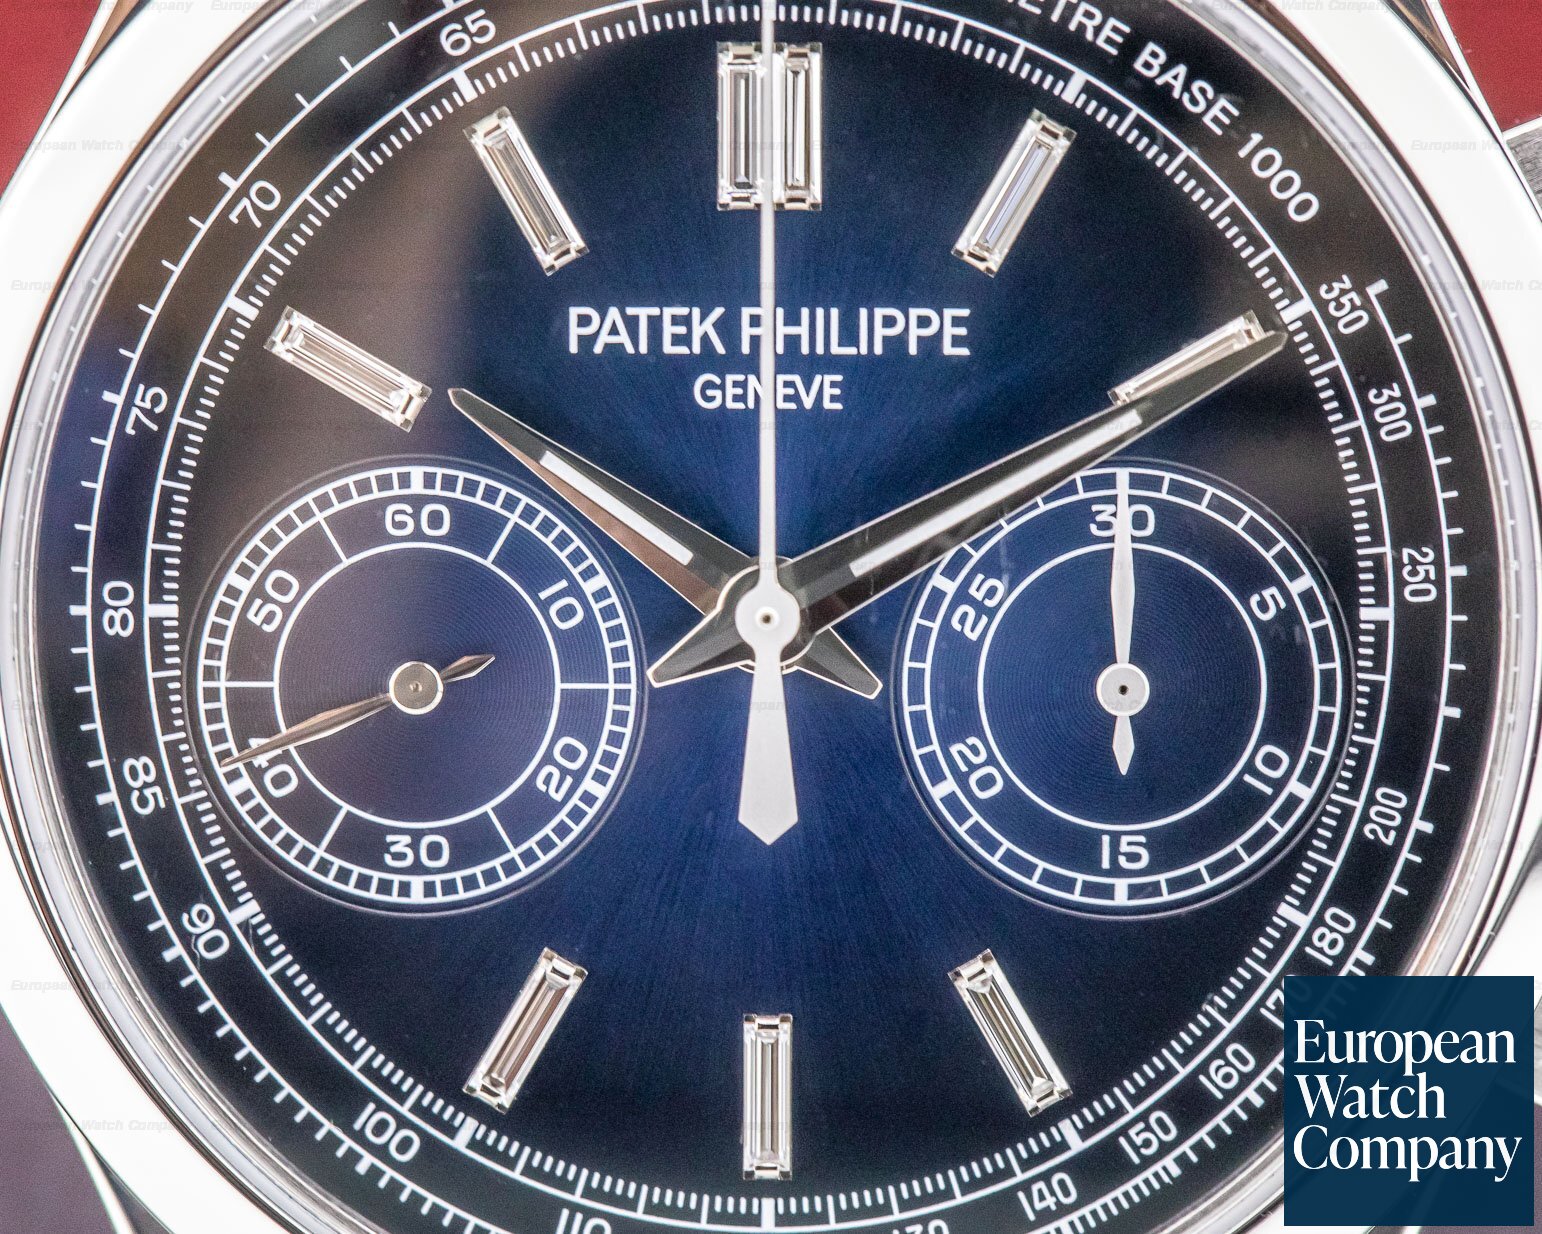 Patek Philippe Chronograph Platinum Blue Diamond Dial Ref. 5170P-001